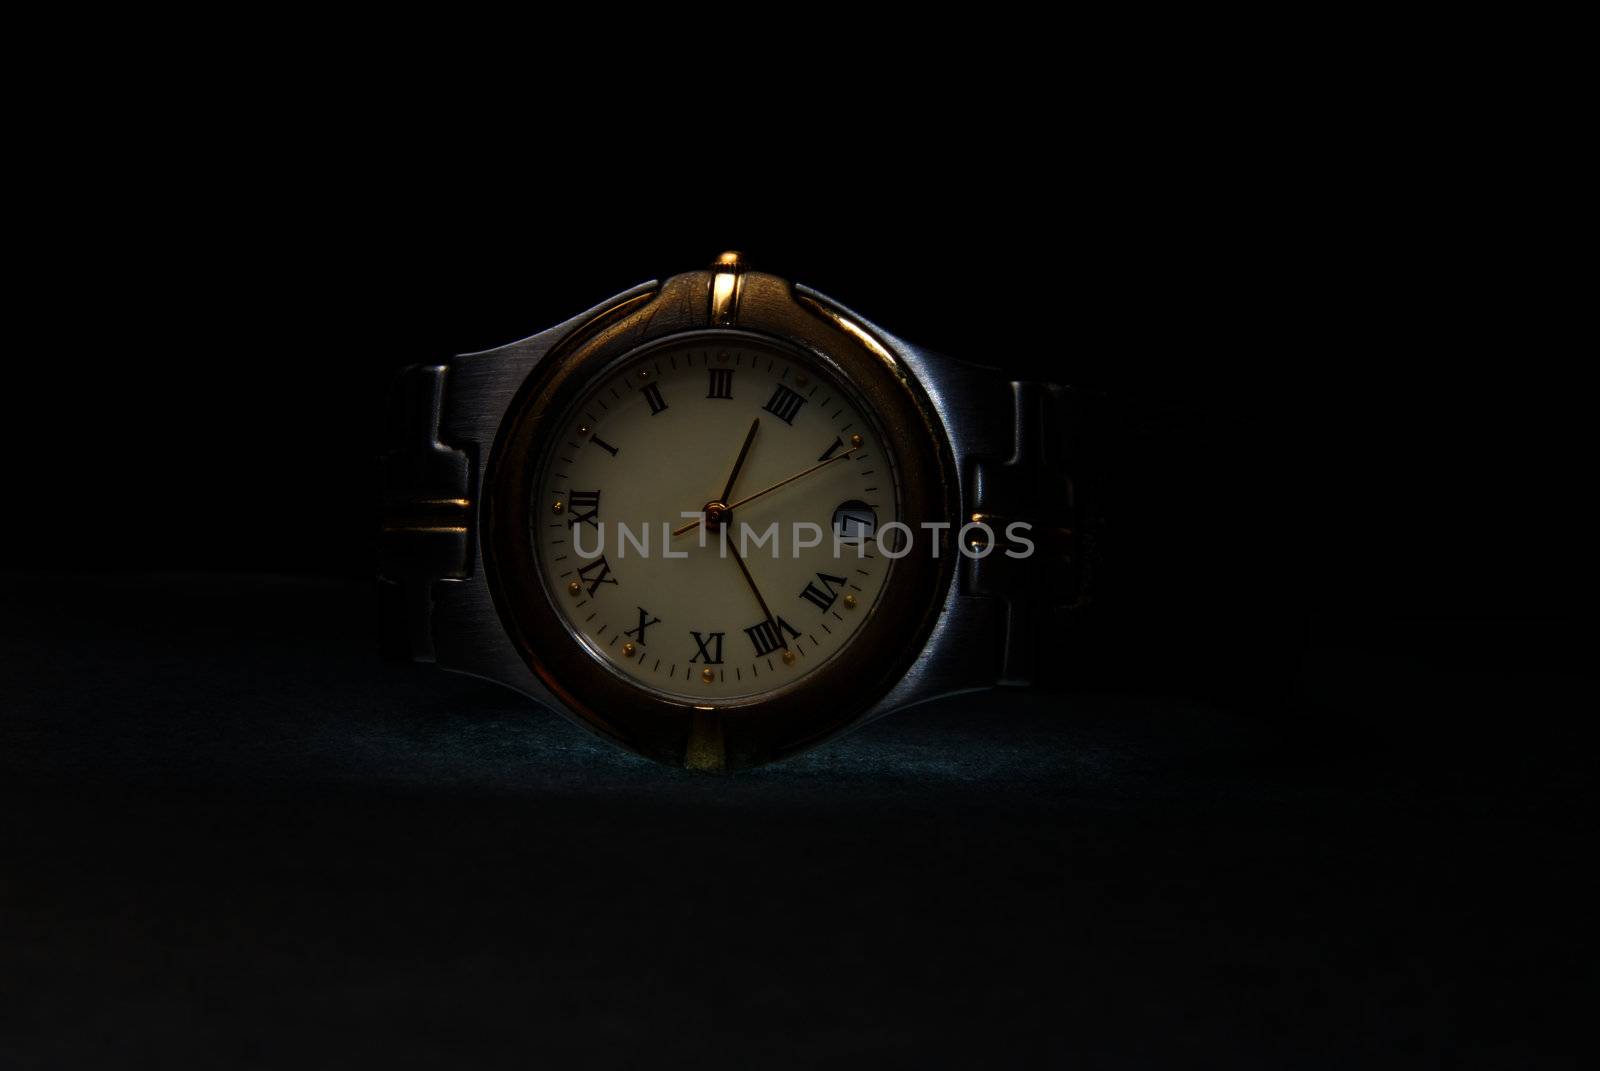 Silver wristwatch with chromium body on a dark background